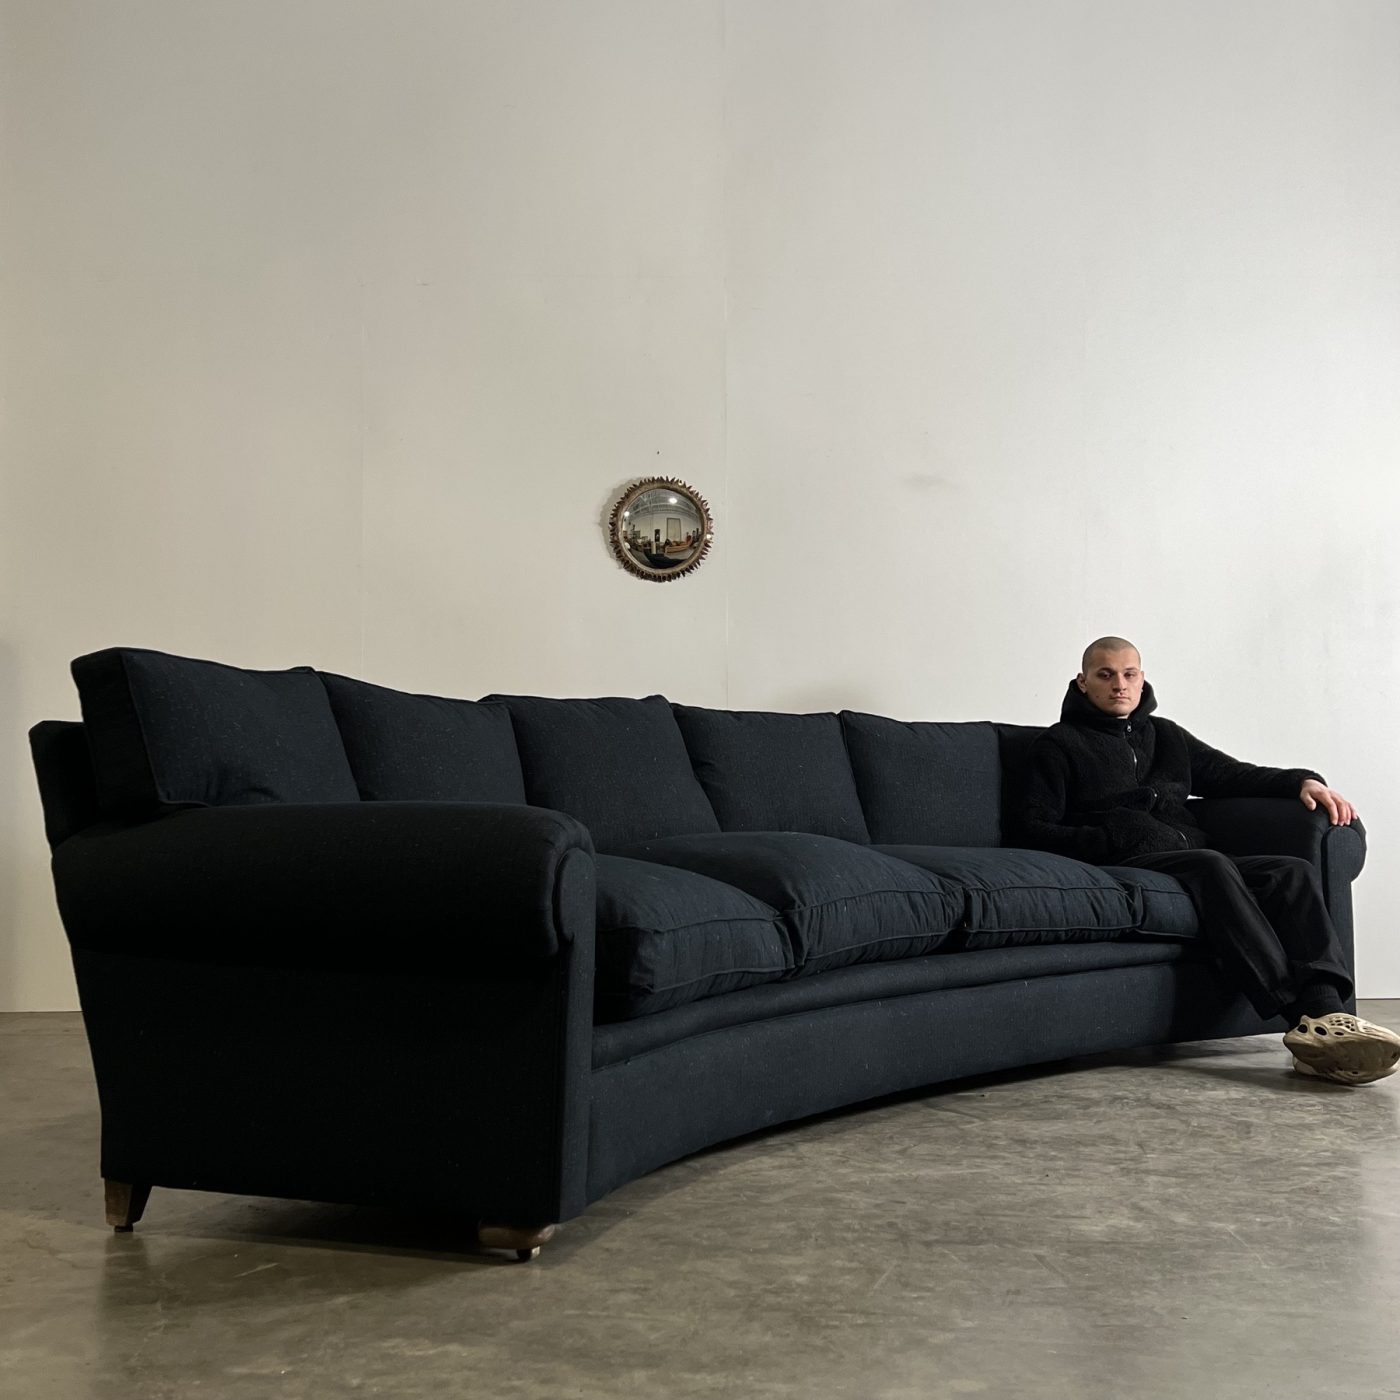 objet-vagabond-huge-sofa0001